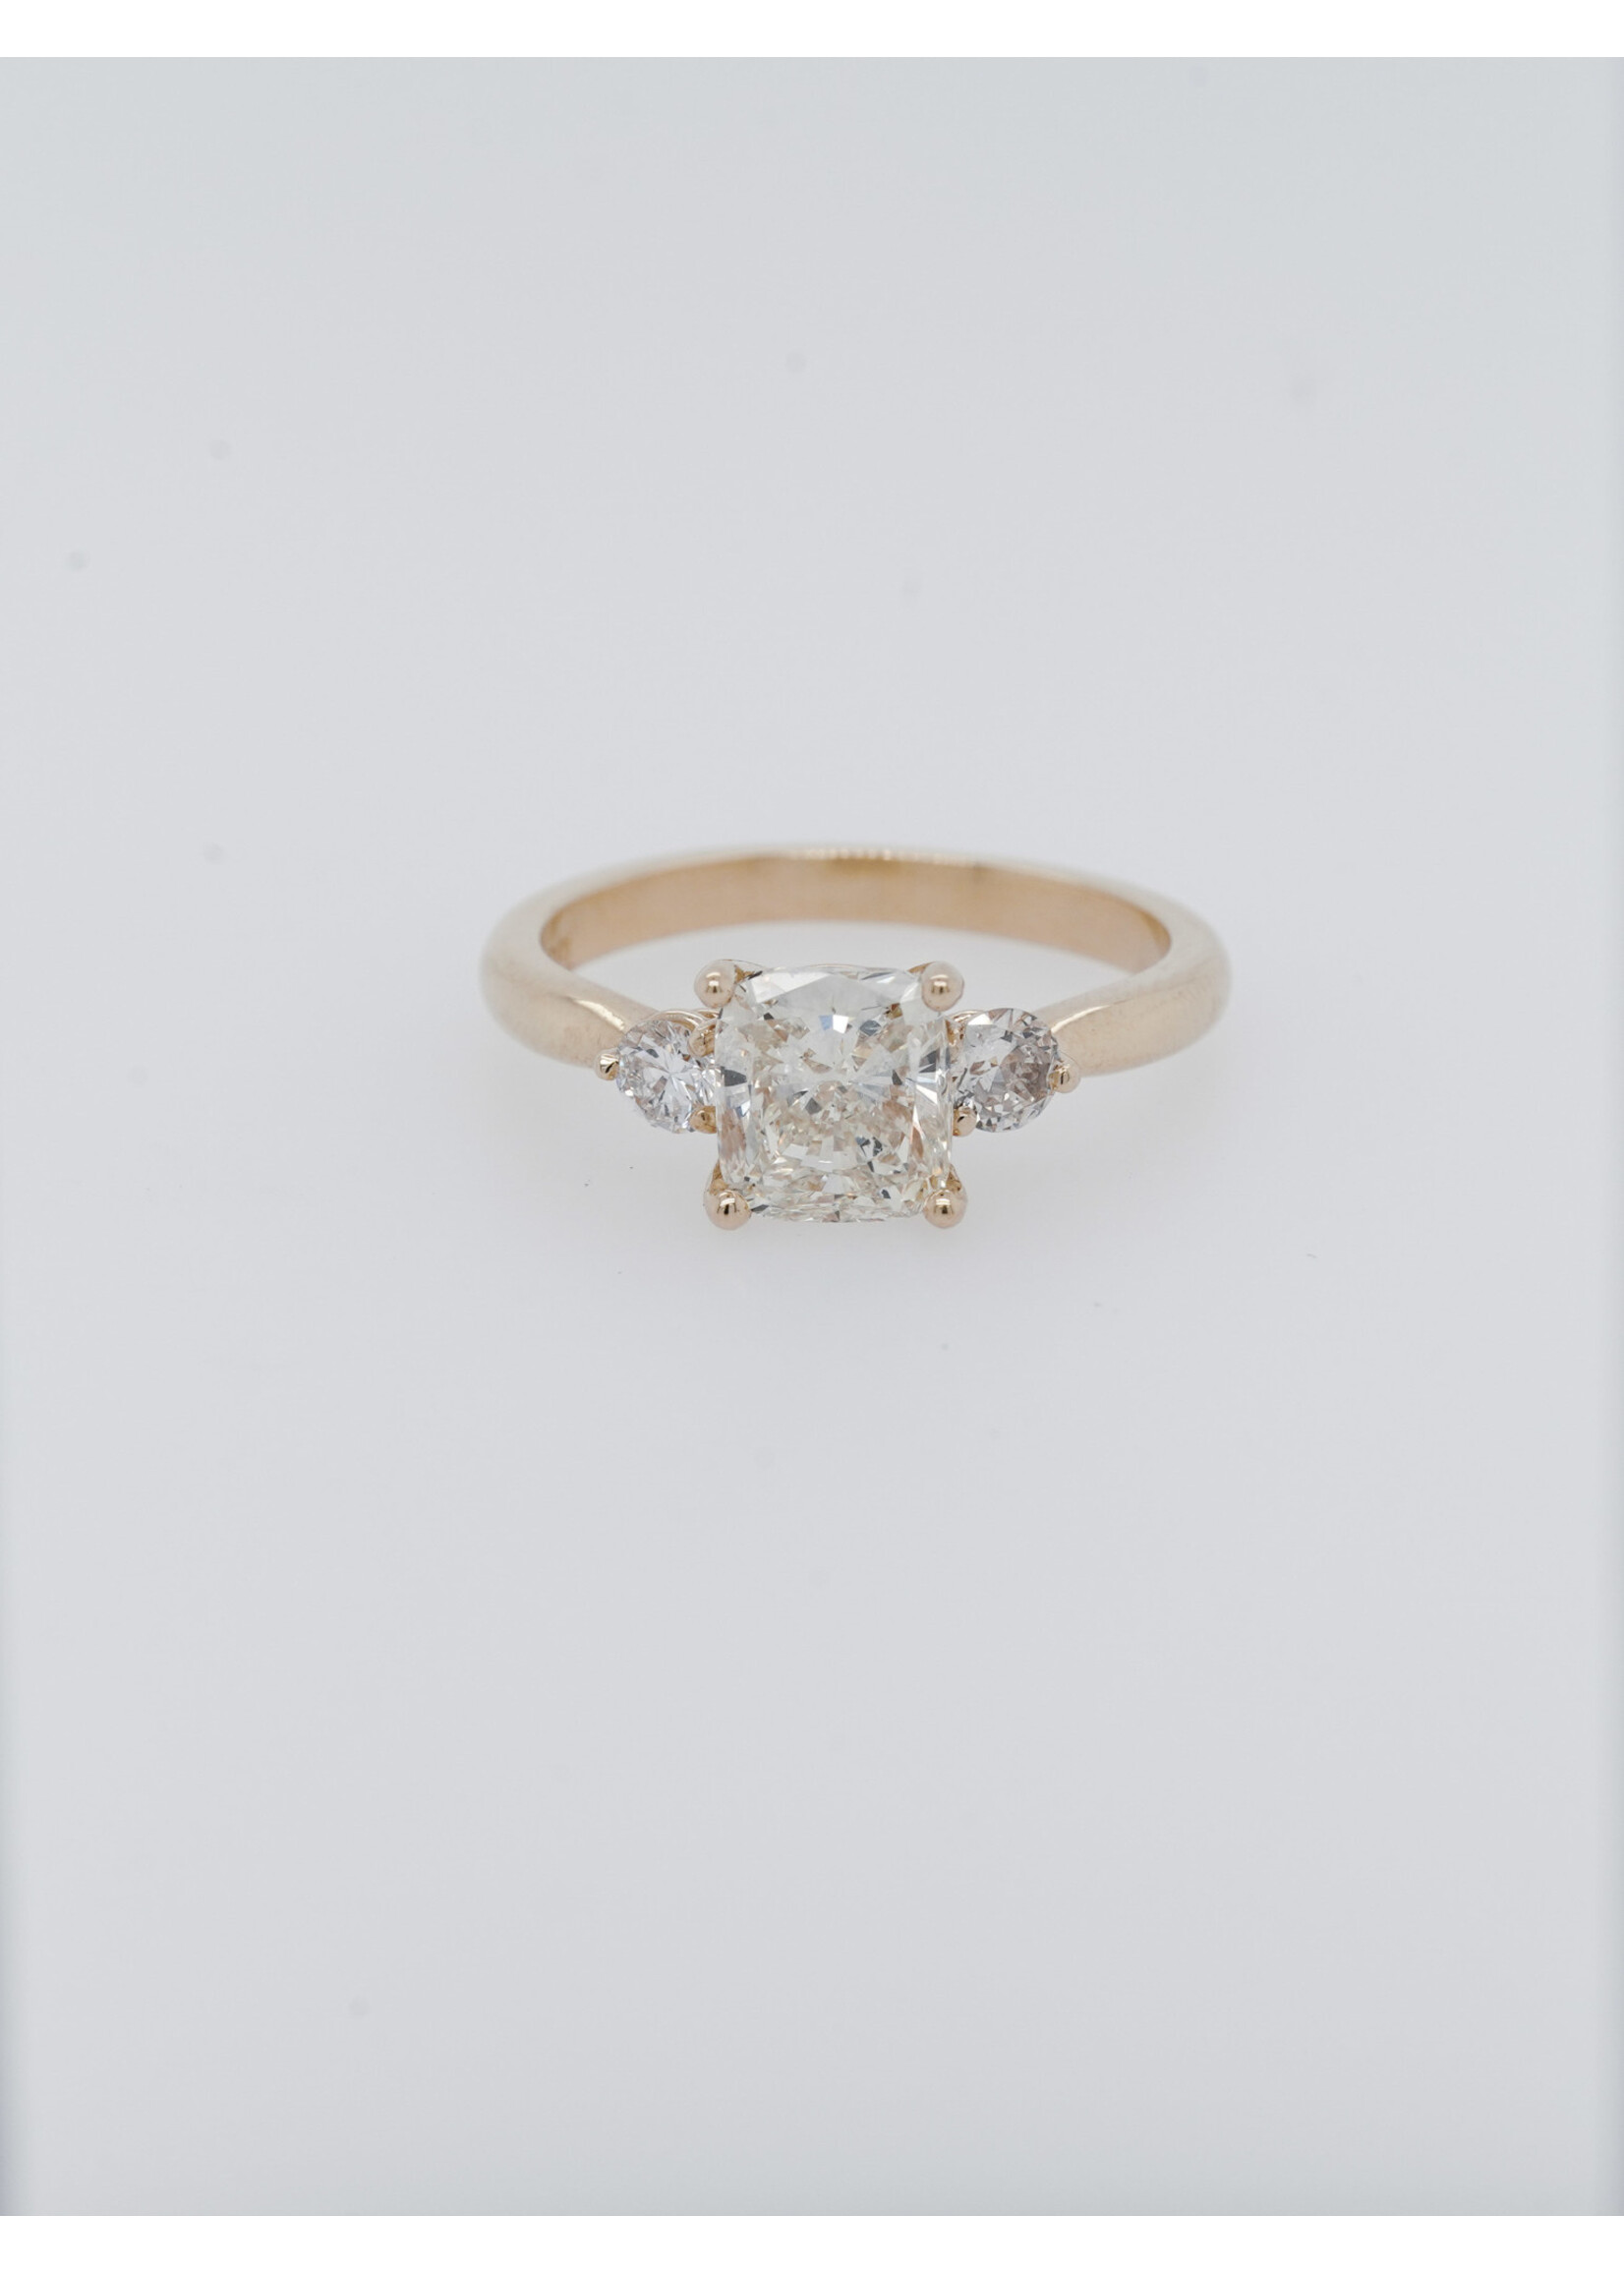 14KY 3.38g 2.02ctw (1.70ctr) K-L/SI1 Cushion Diamond 3-Stone Engagement Ring (size 7)